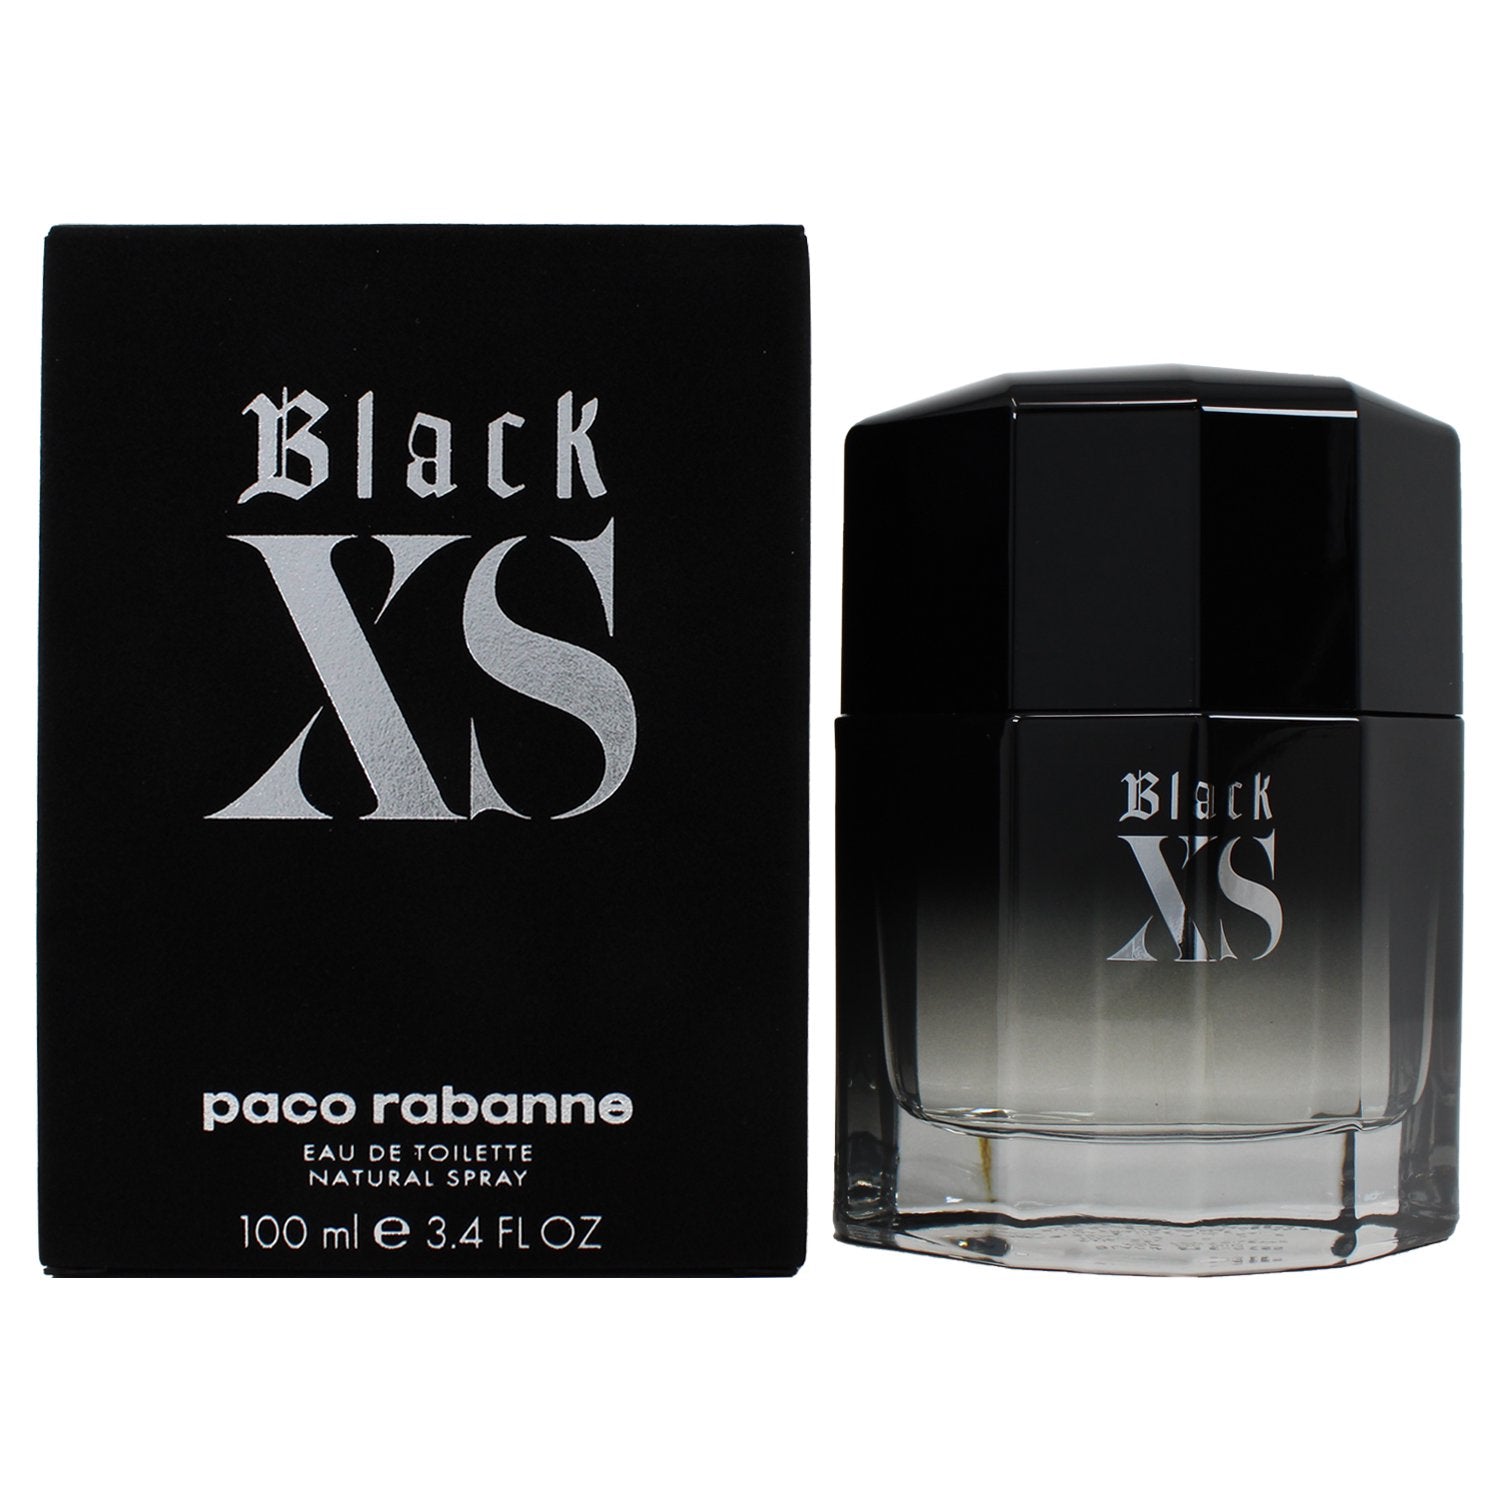 Black XS (2018) by Paco Rabanne 3.4 oz EDT Spray for Men